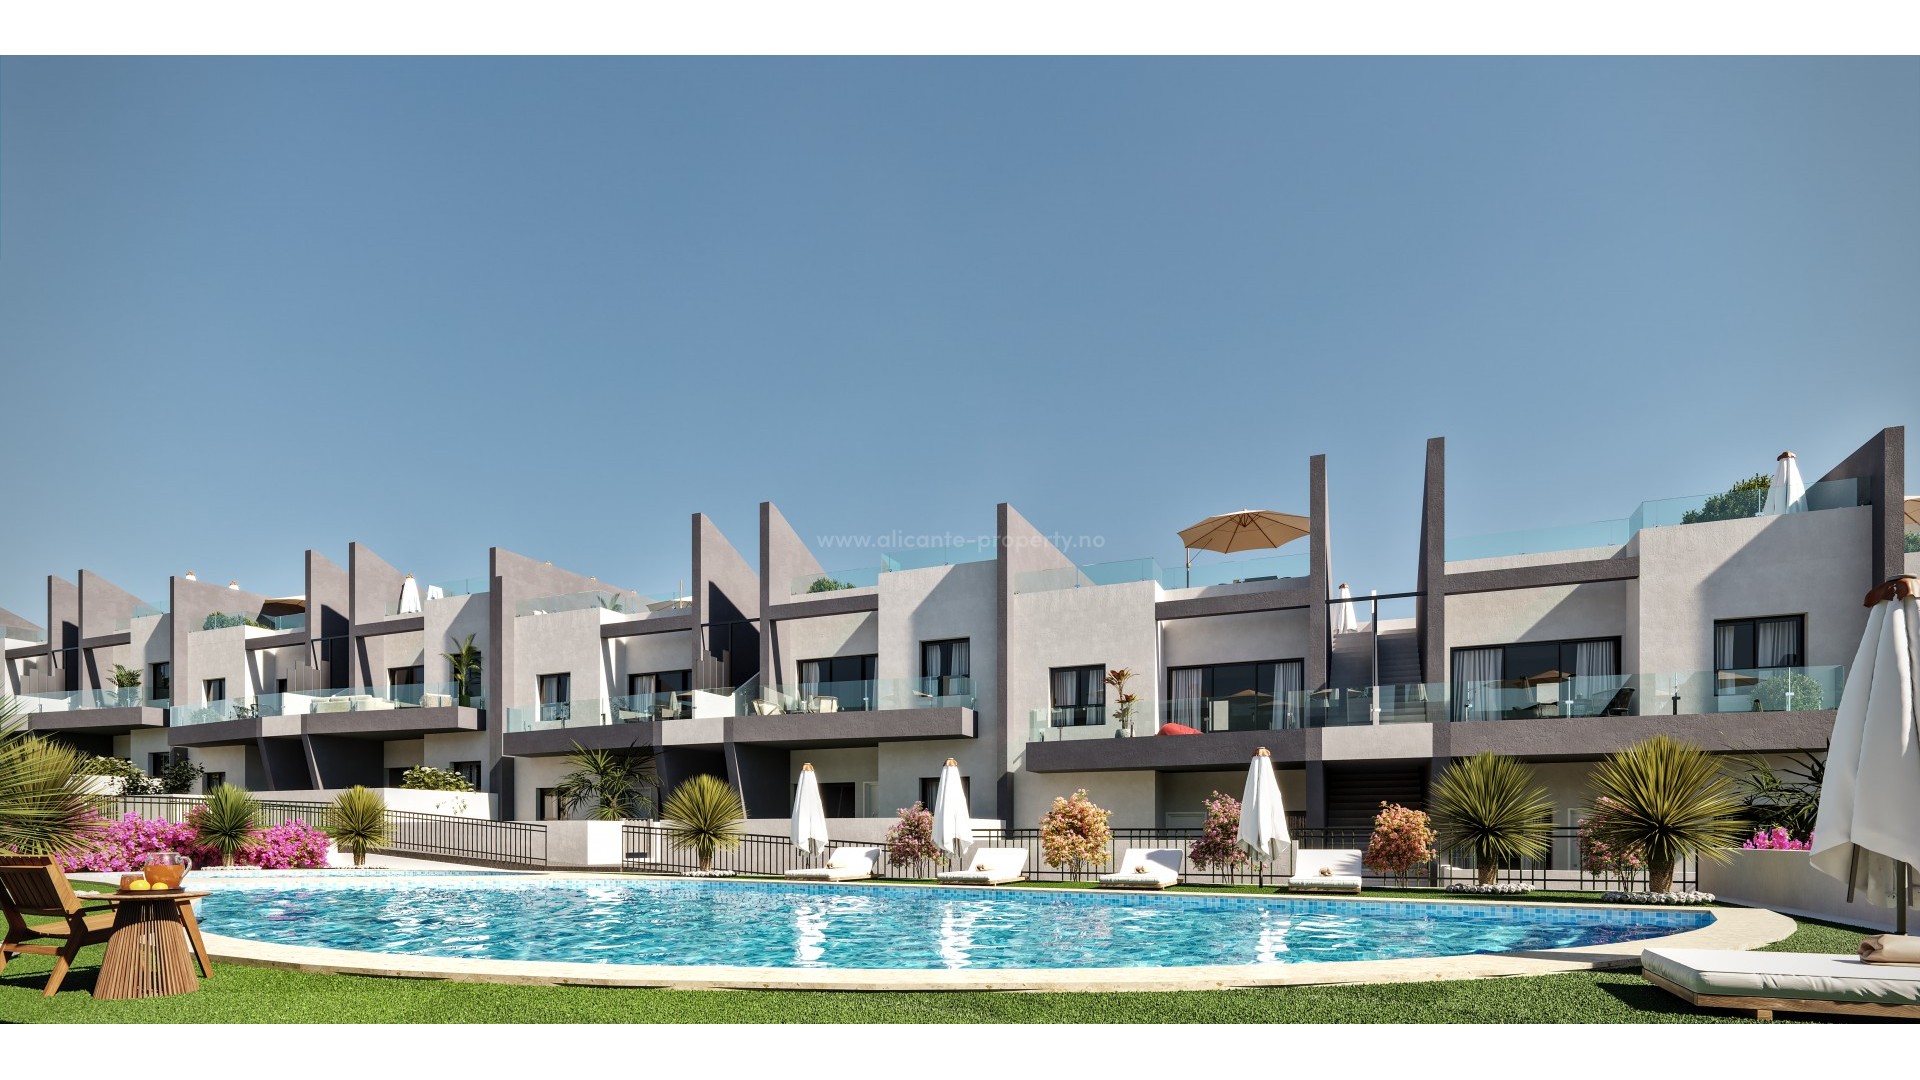 Tomanns-bolig/bungalow i San Miguel de Salinas, nær golfbaner, 1,2,3 soverom, solarium, felles basseng for voksne og barn, grøntområder, lekeplass    